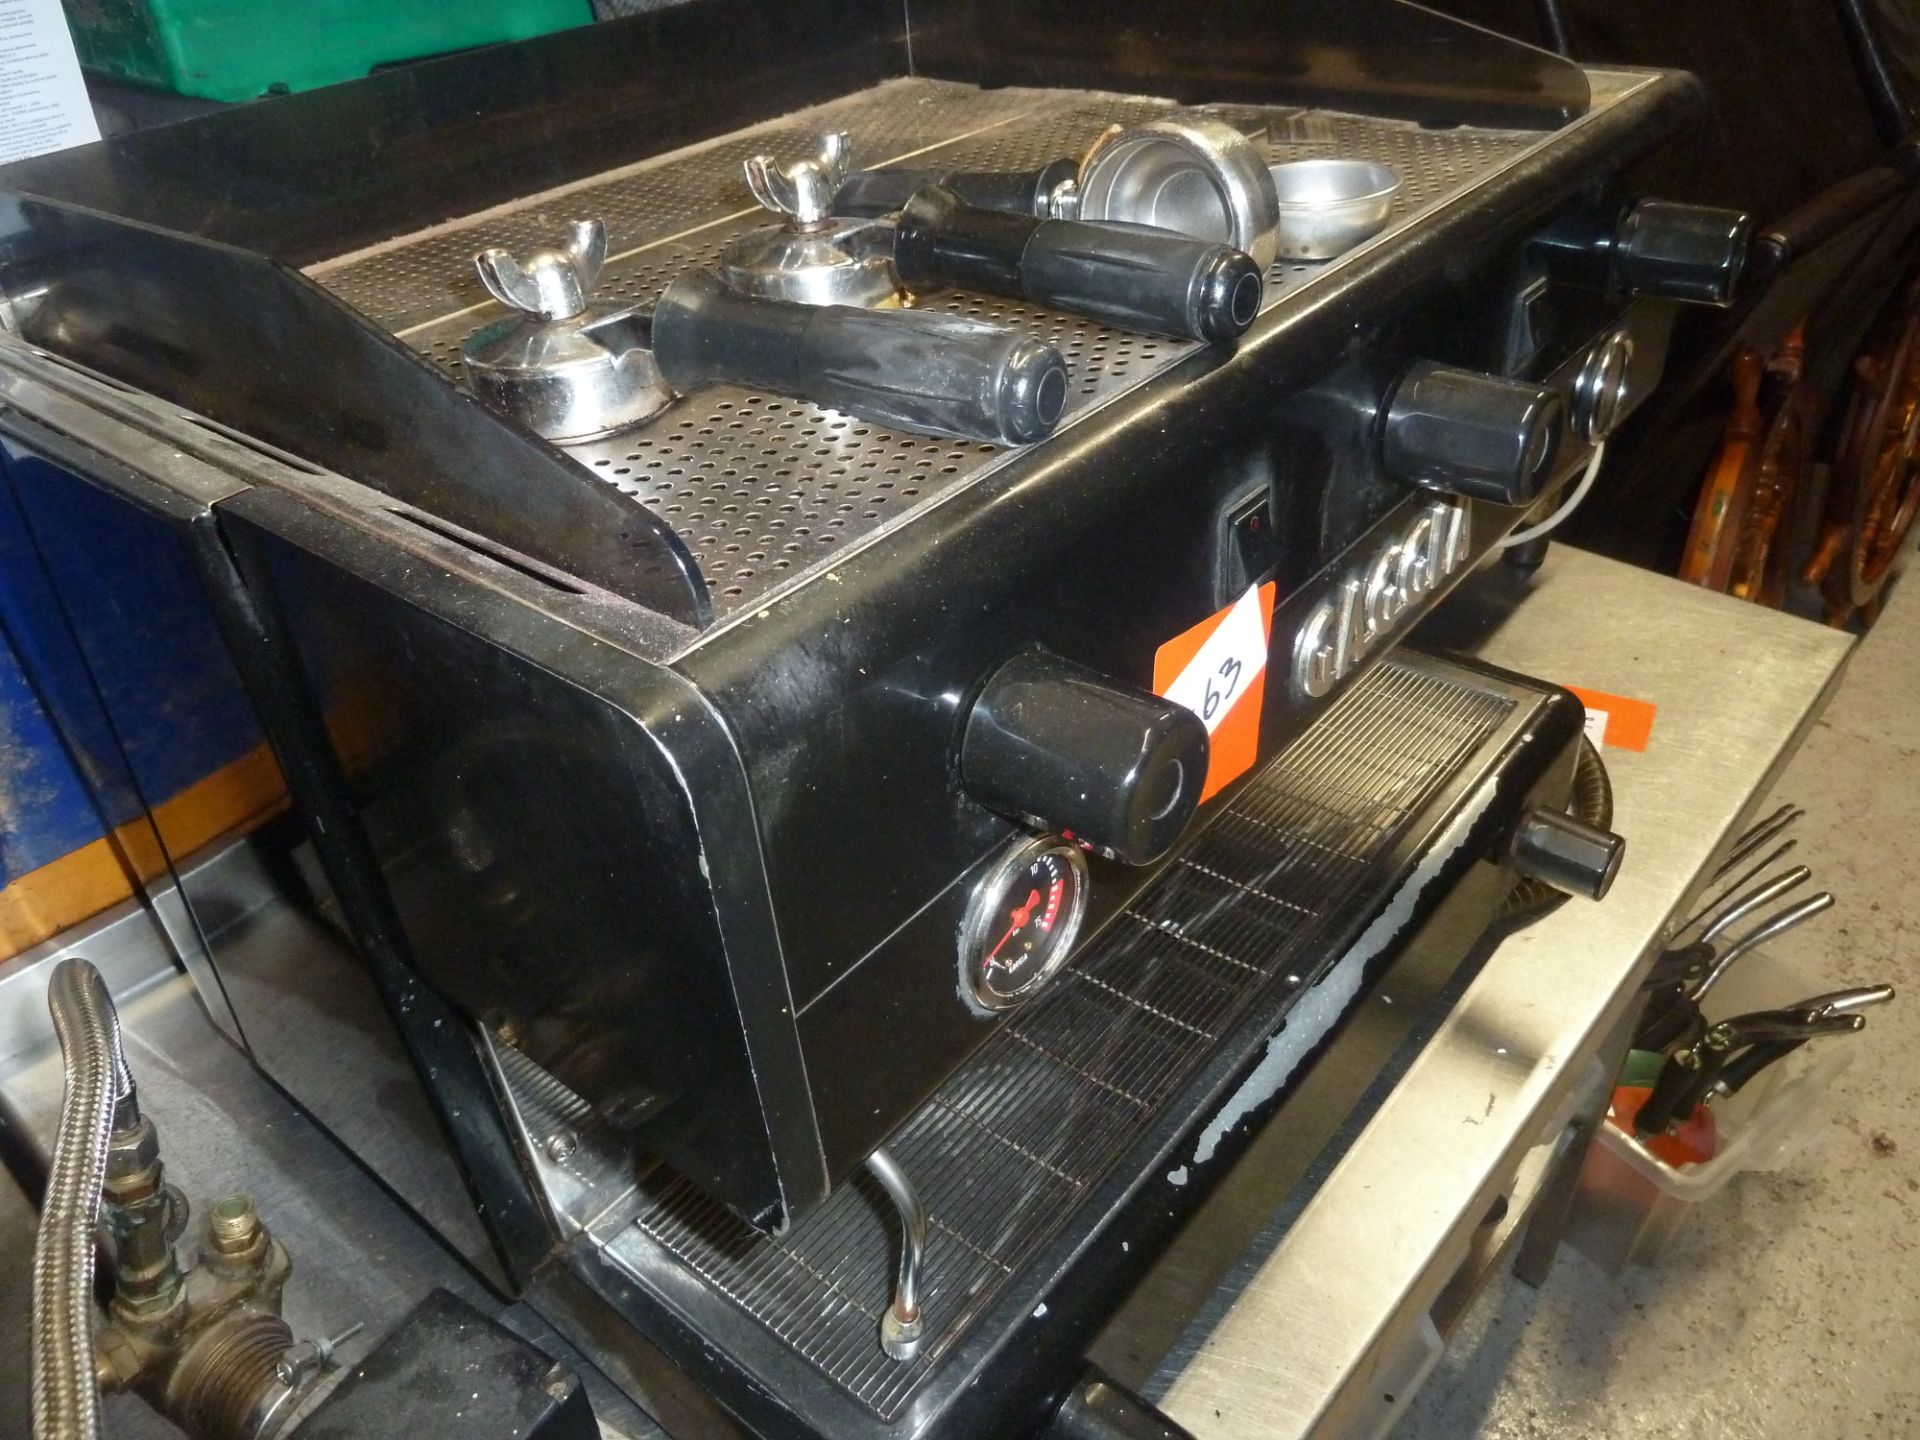 * Gaggia Coffee Machine Premium quality coffee machine, this machine comes with all original extras - Image 3 of 4